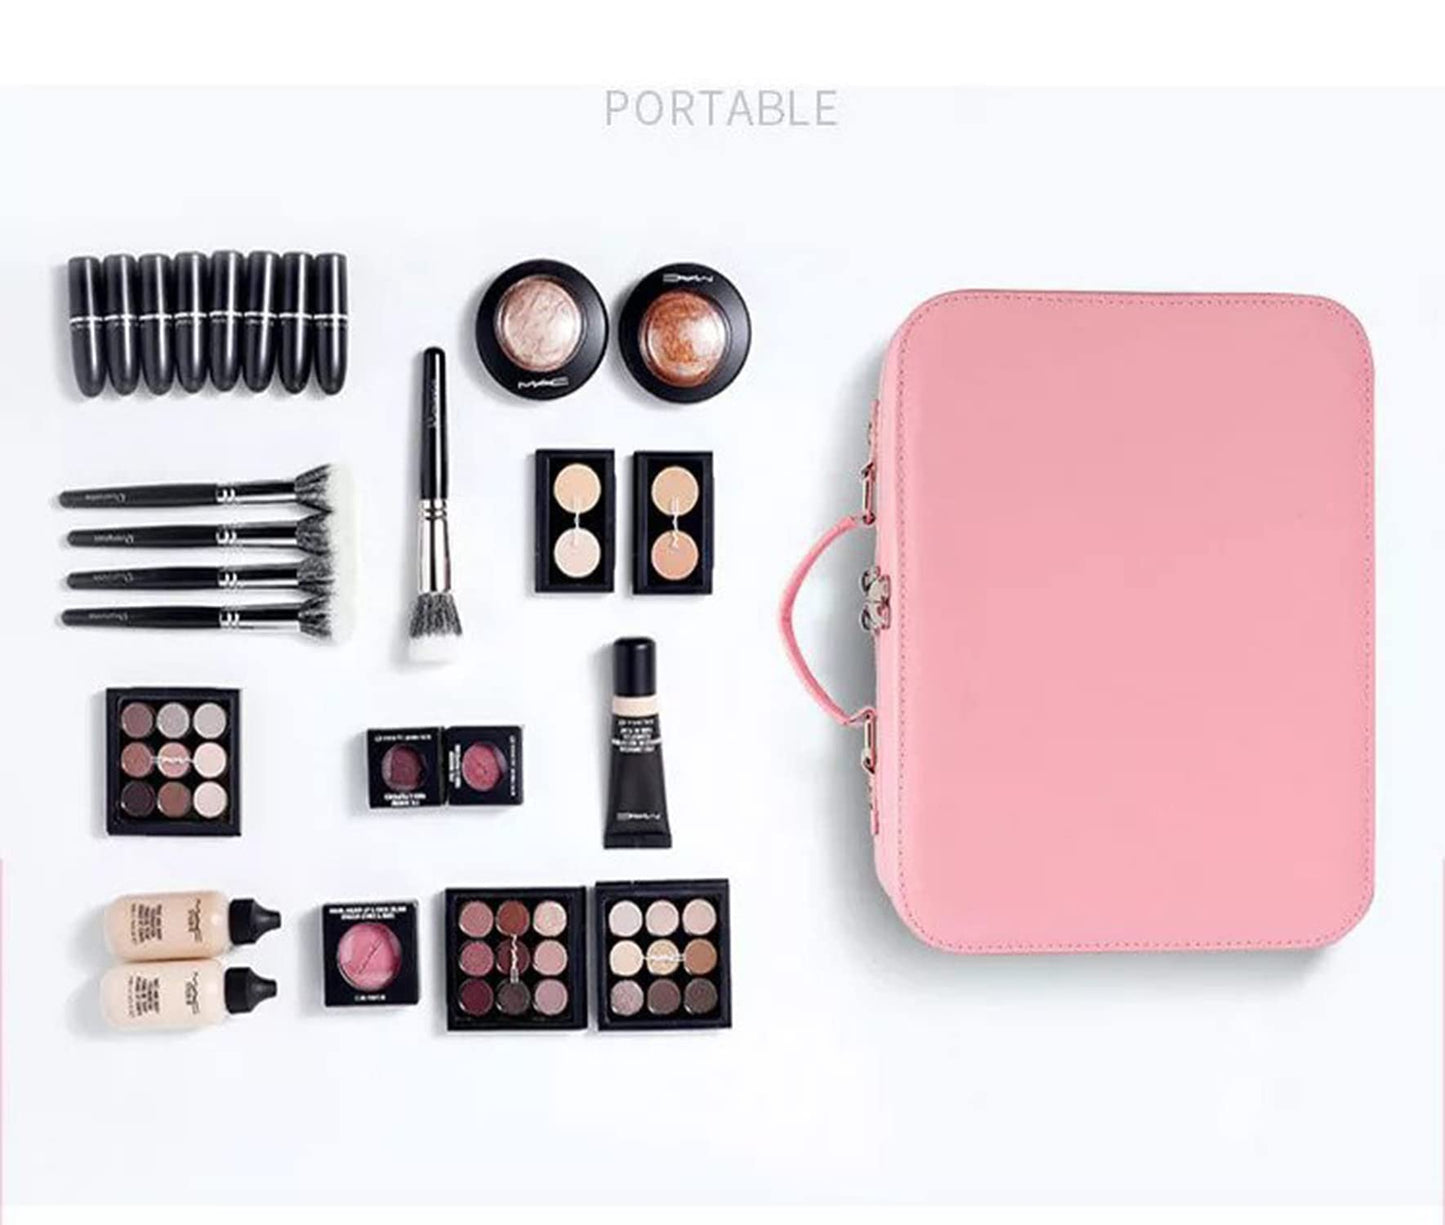 Makeup Organizer Cosmetic Storage Box Makeup Case with Mirror